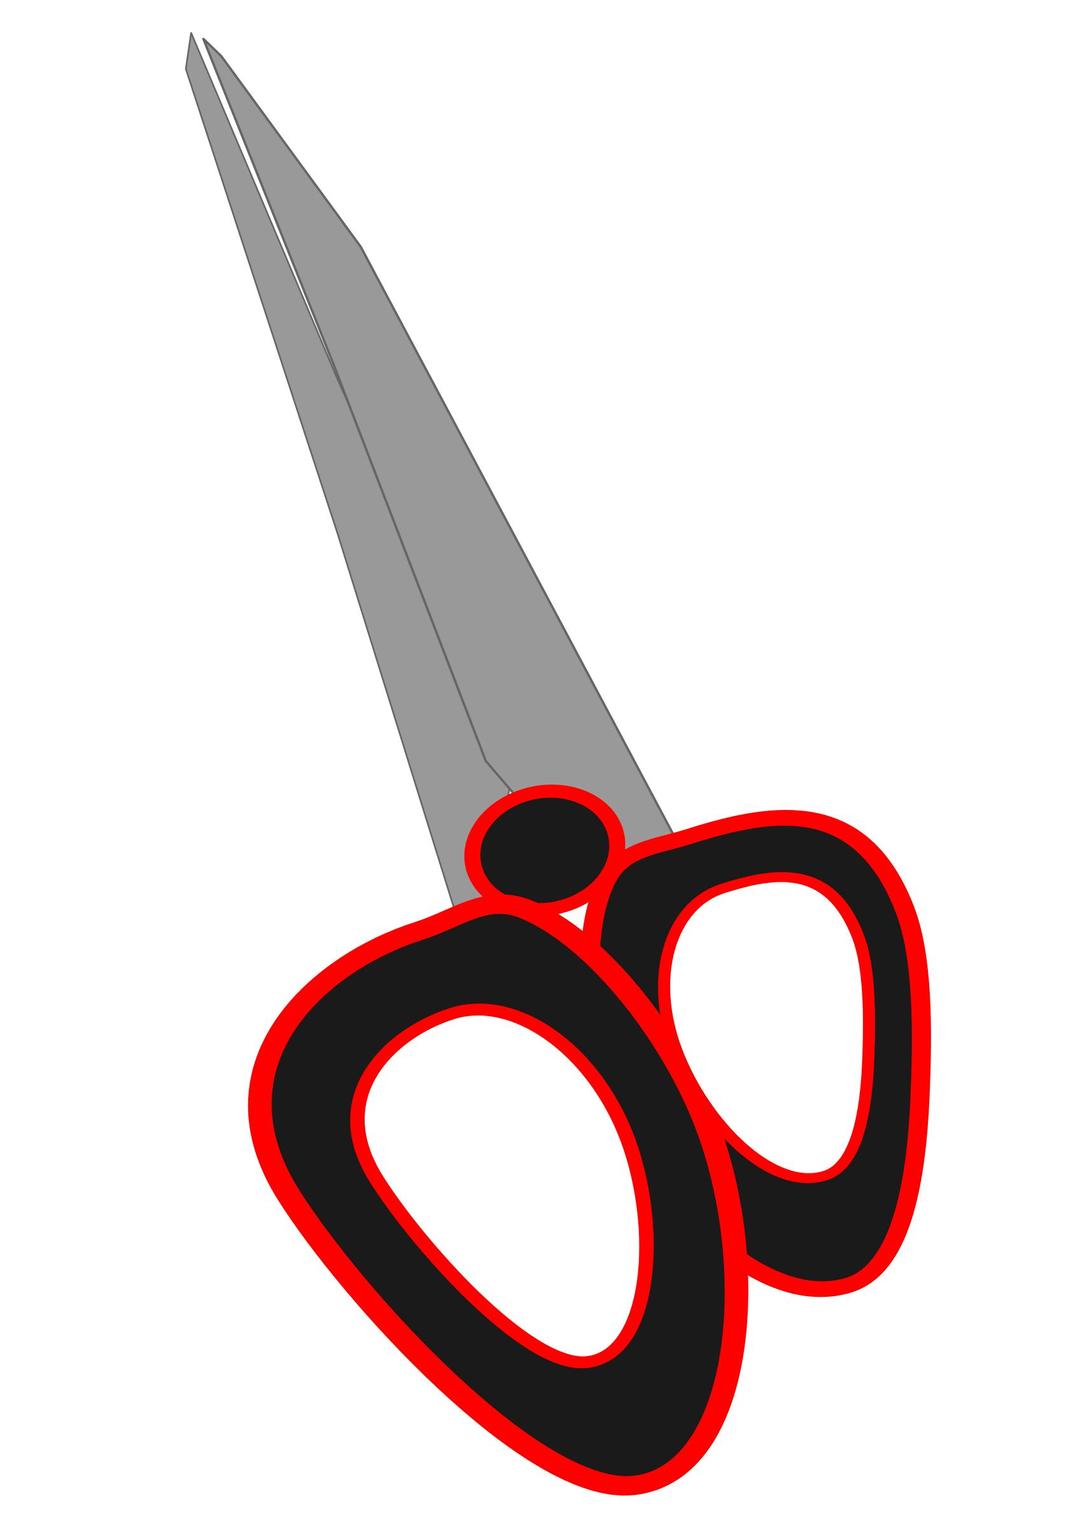 Modern Pair of Swords png transparent